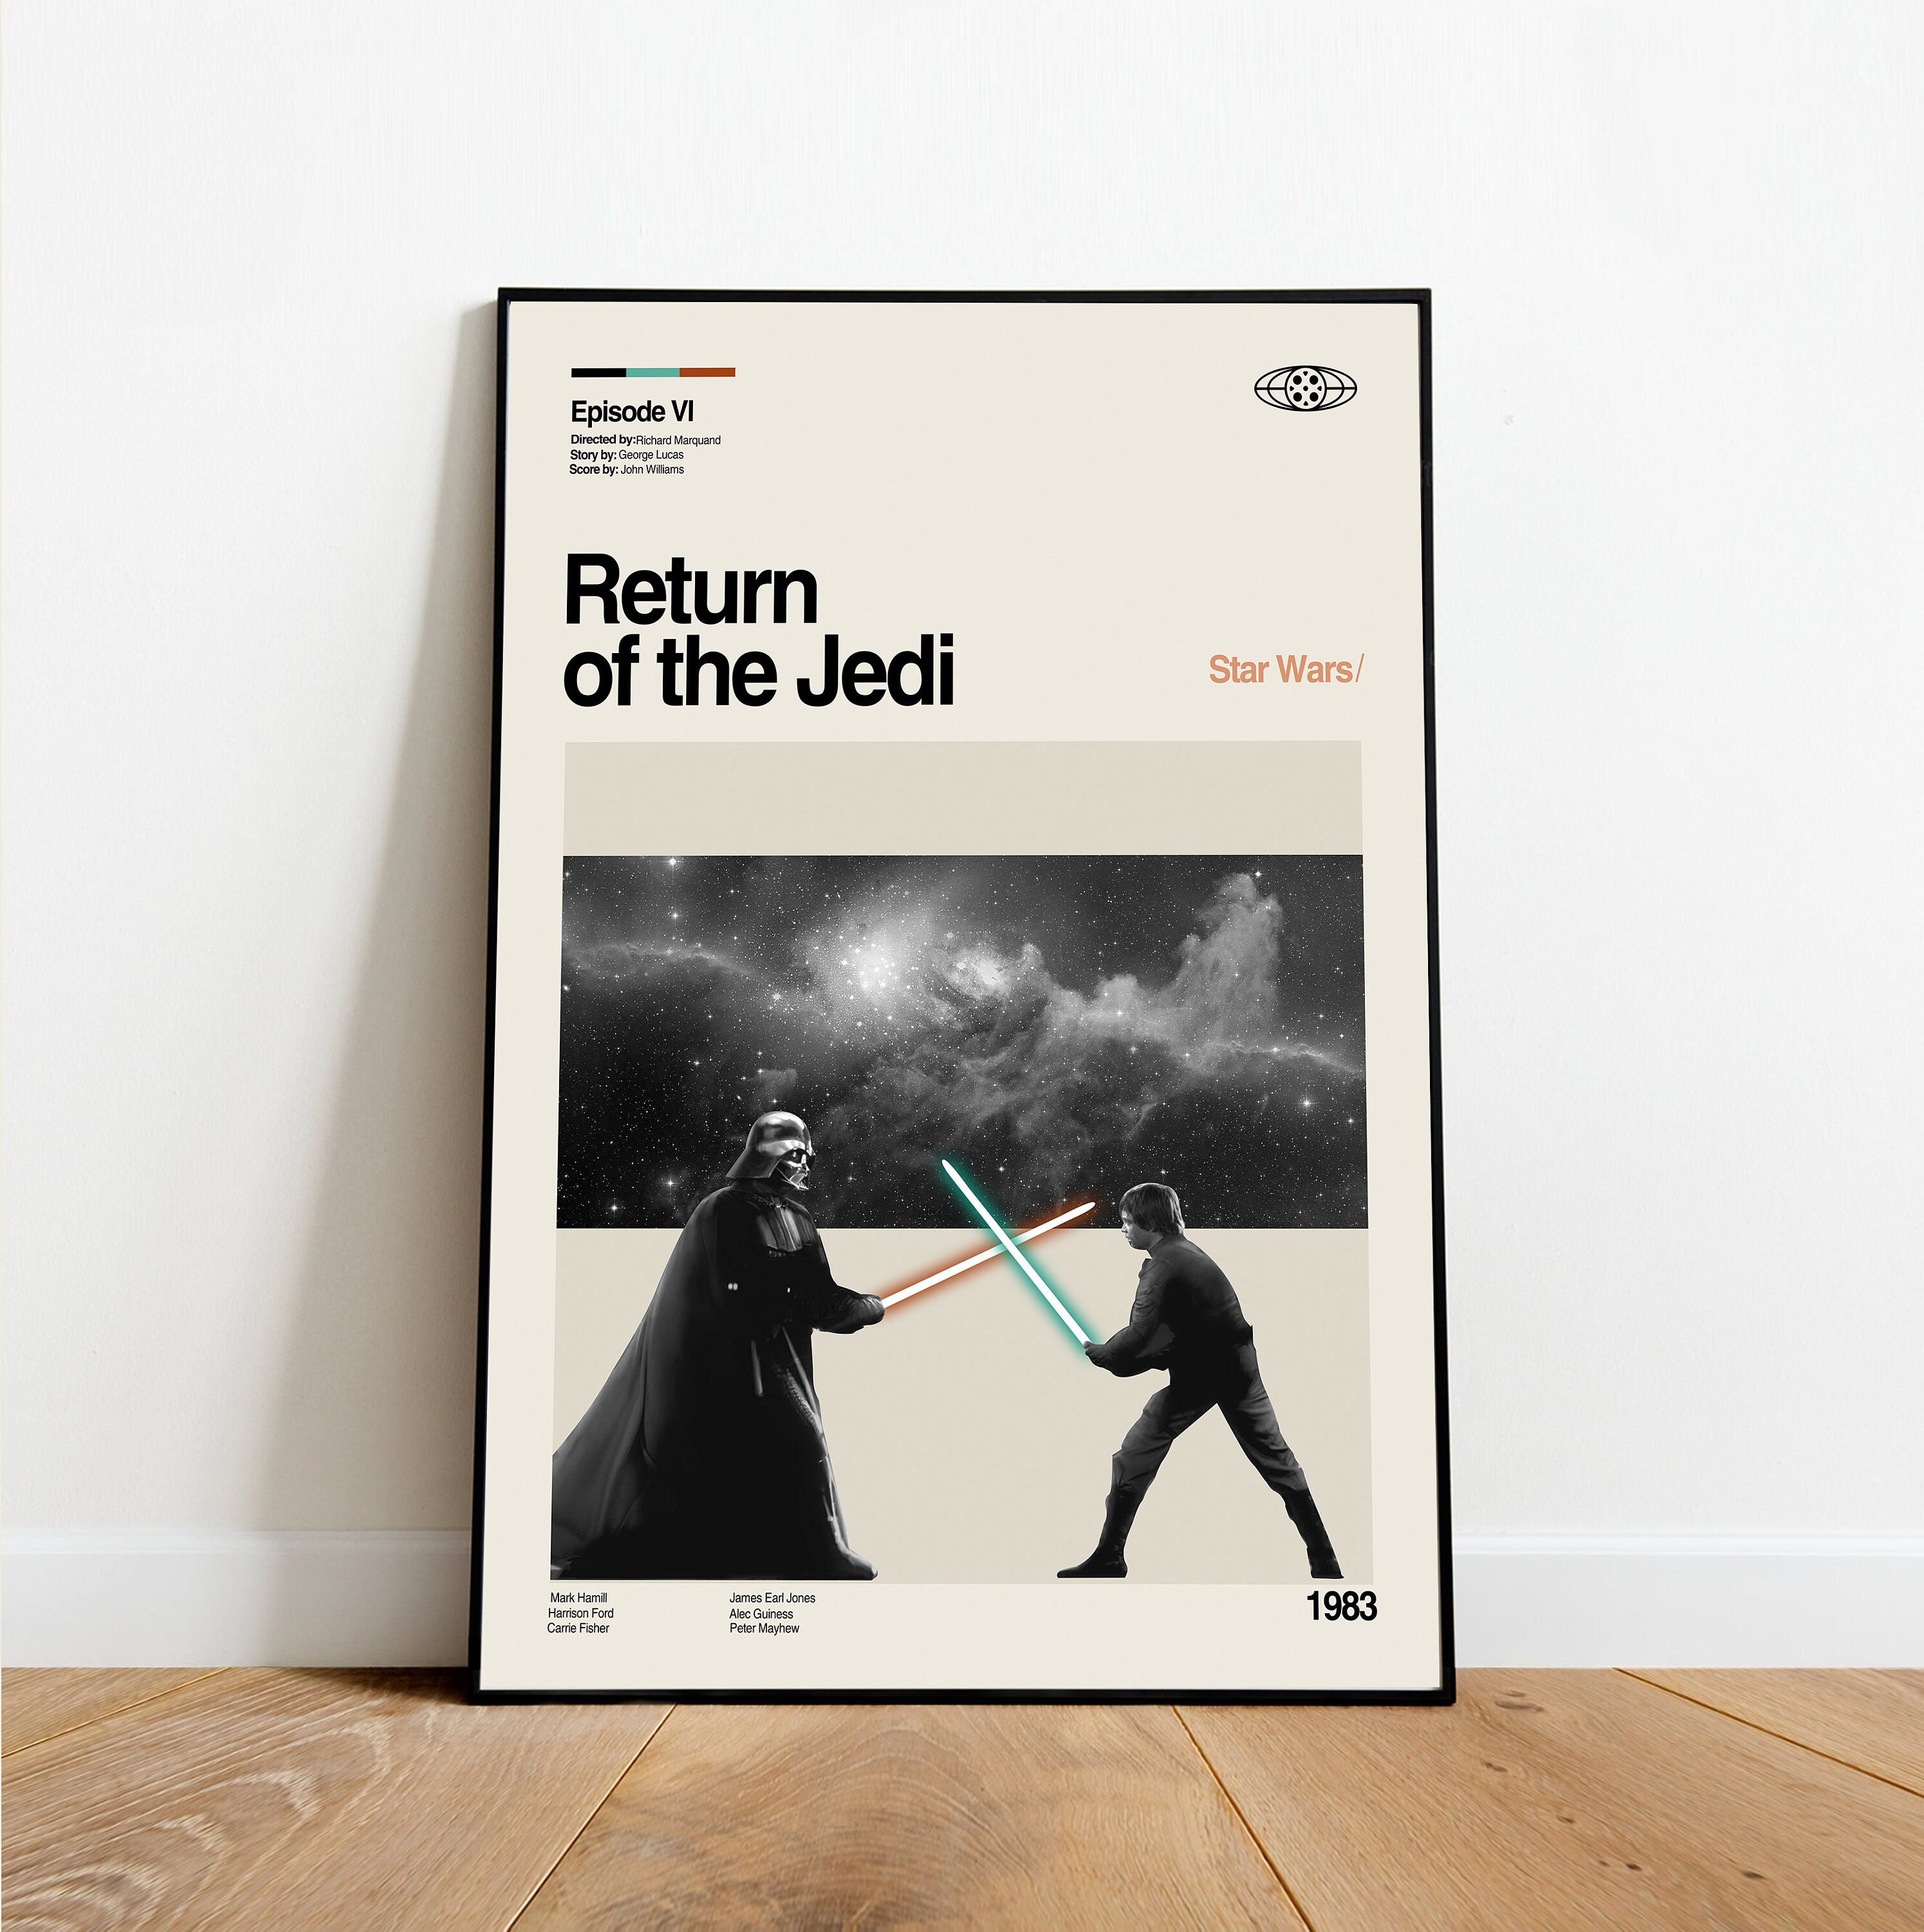 Return Of the Jedi - Star Wars - retro-modern, vintage inspired Poster